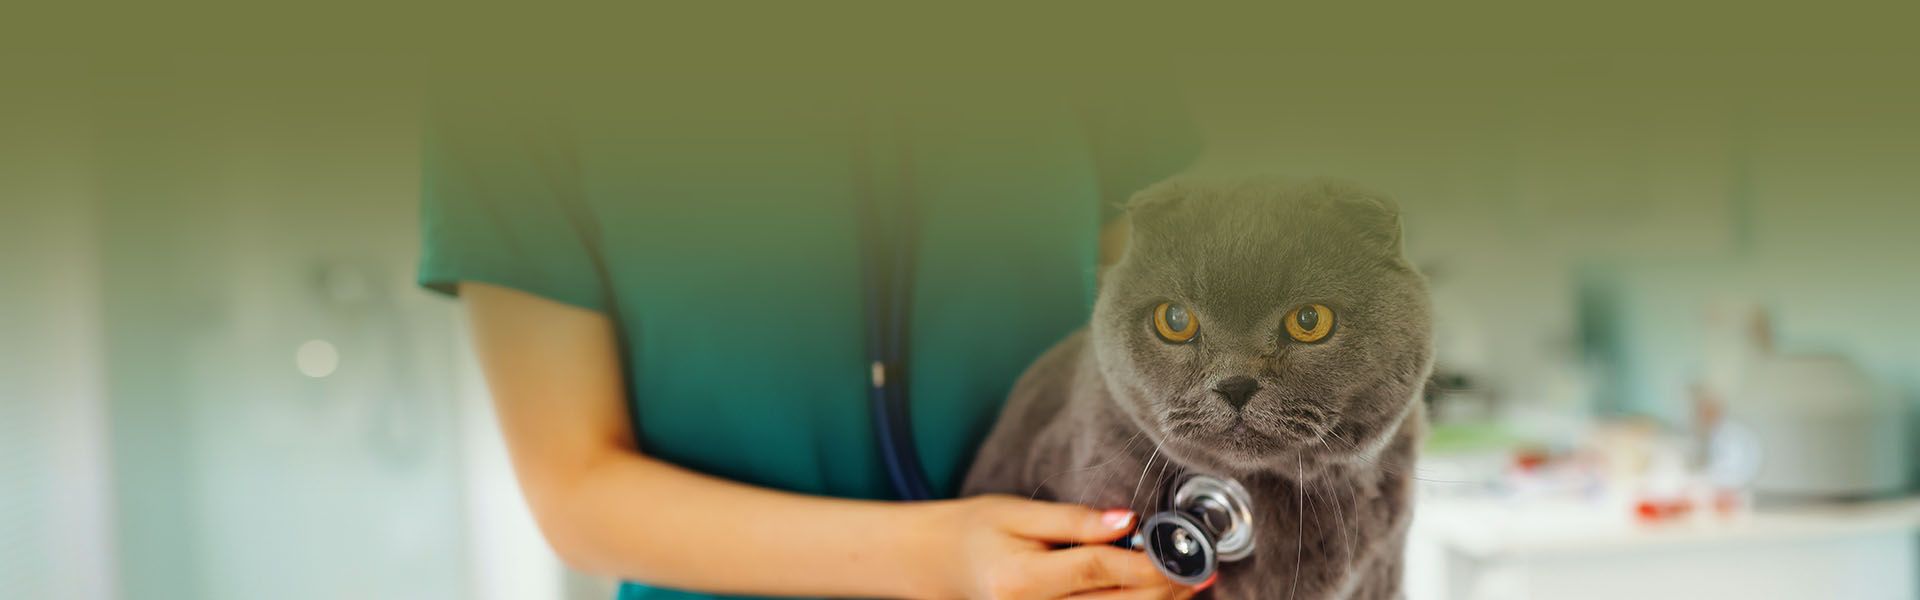 veterinarian examining cat at table